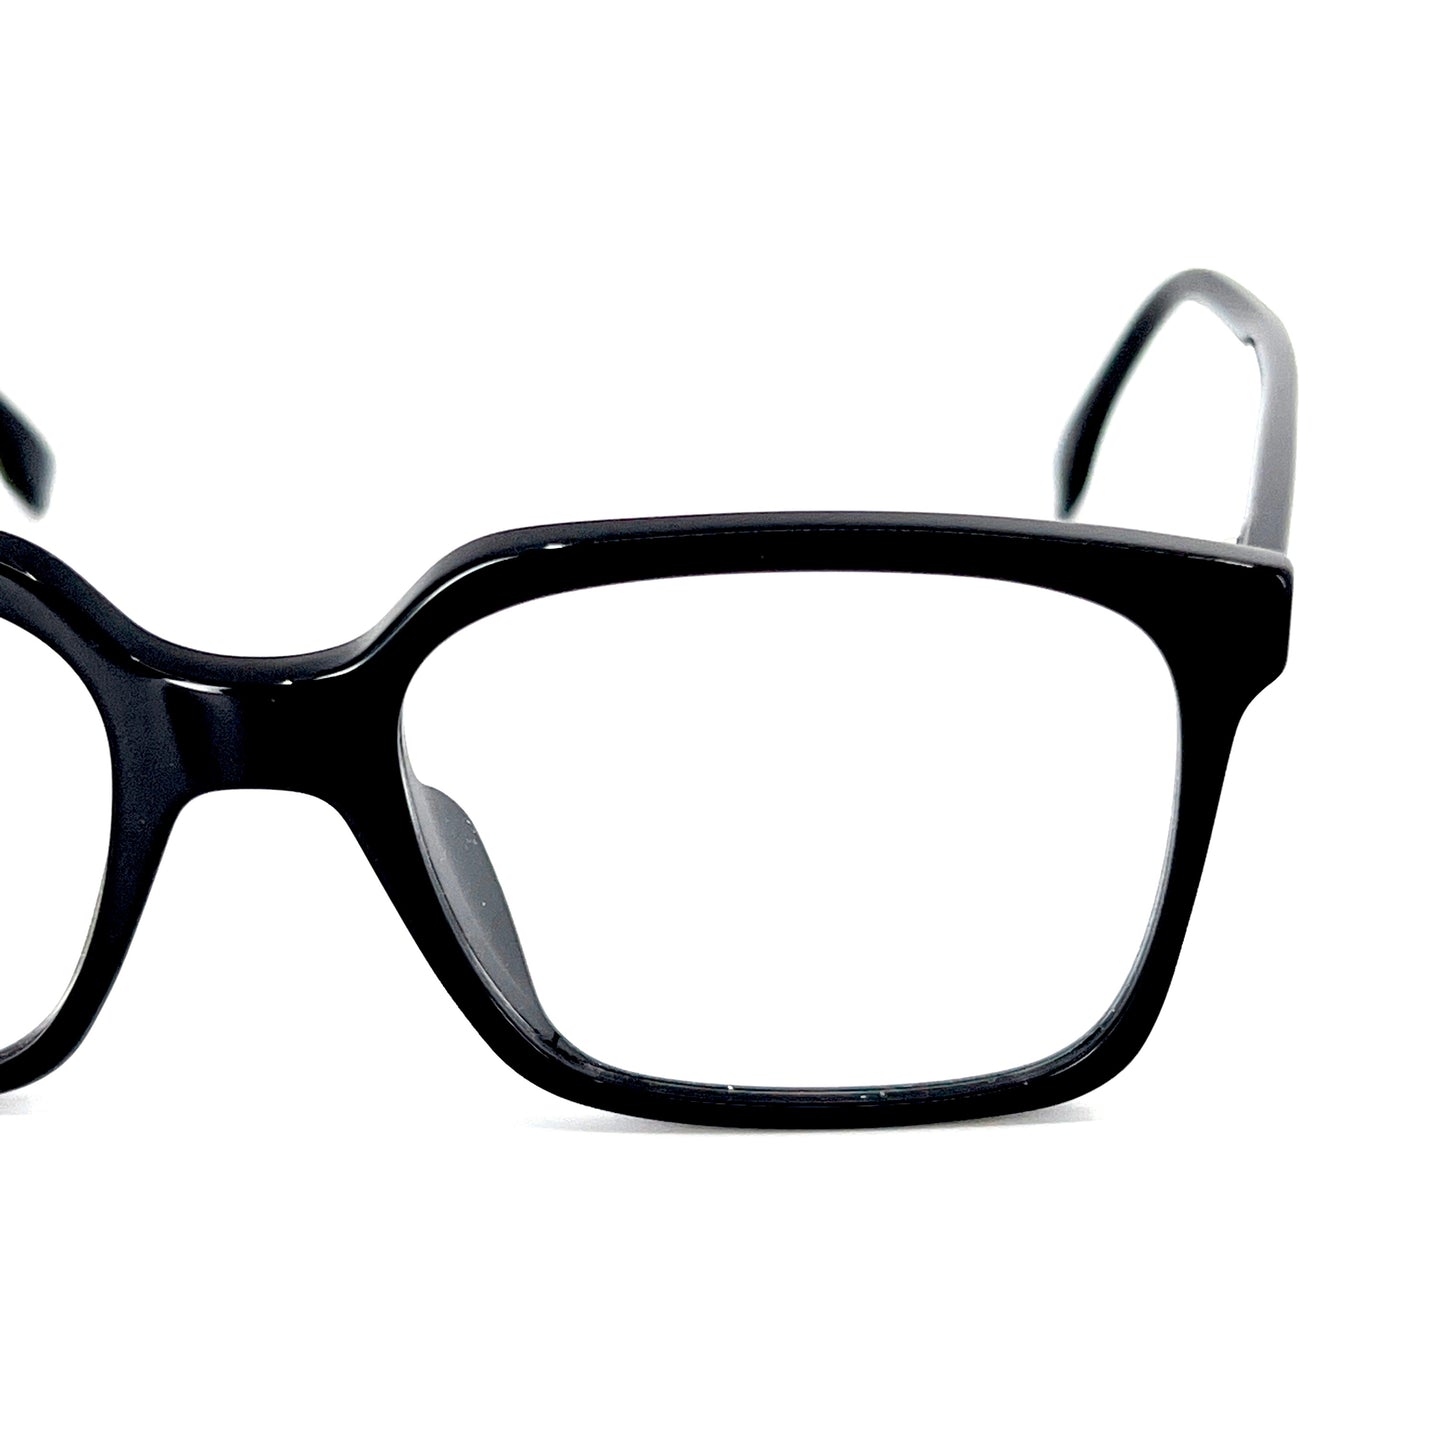 FENDI Eyeglasses FE50032I 001